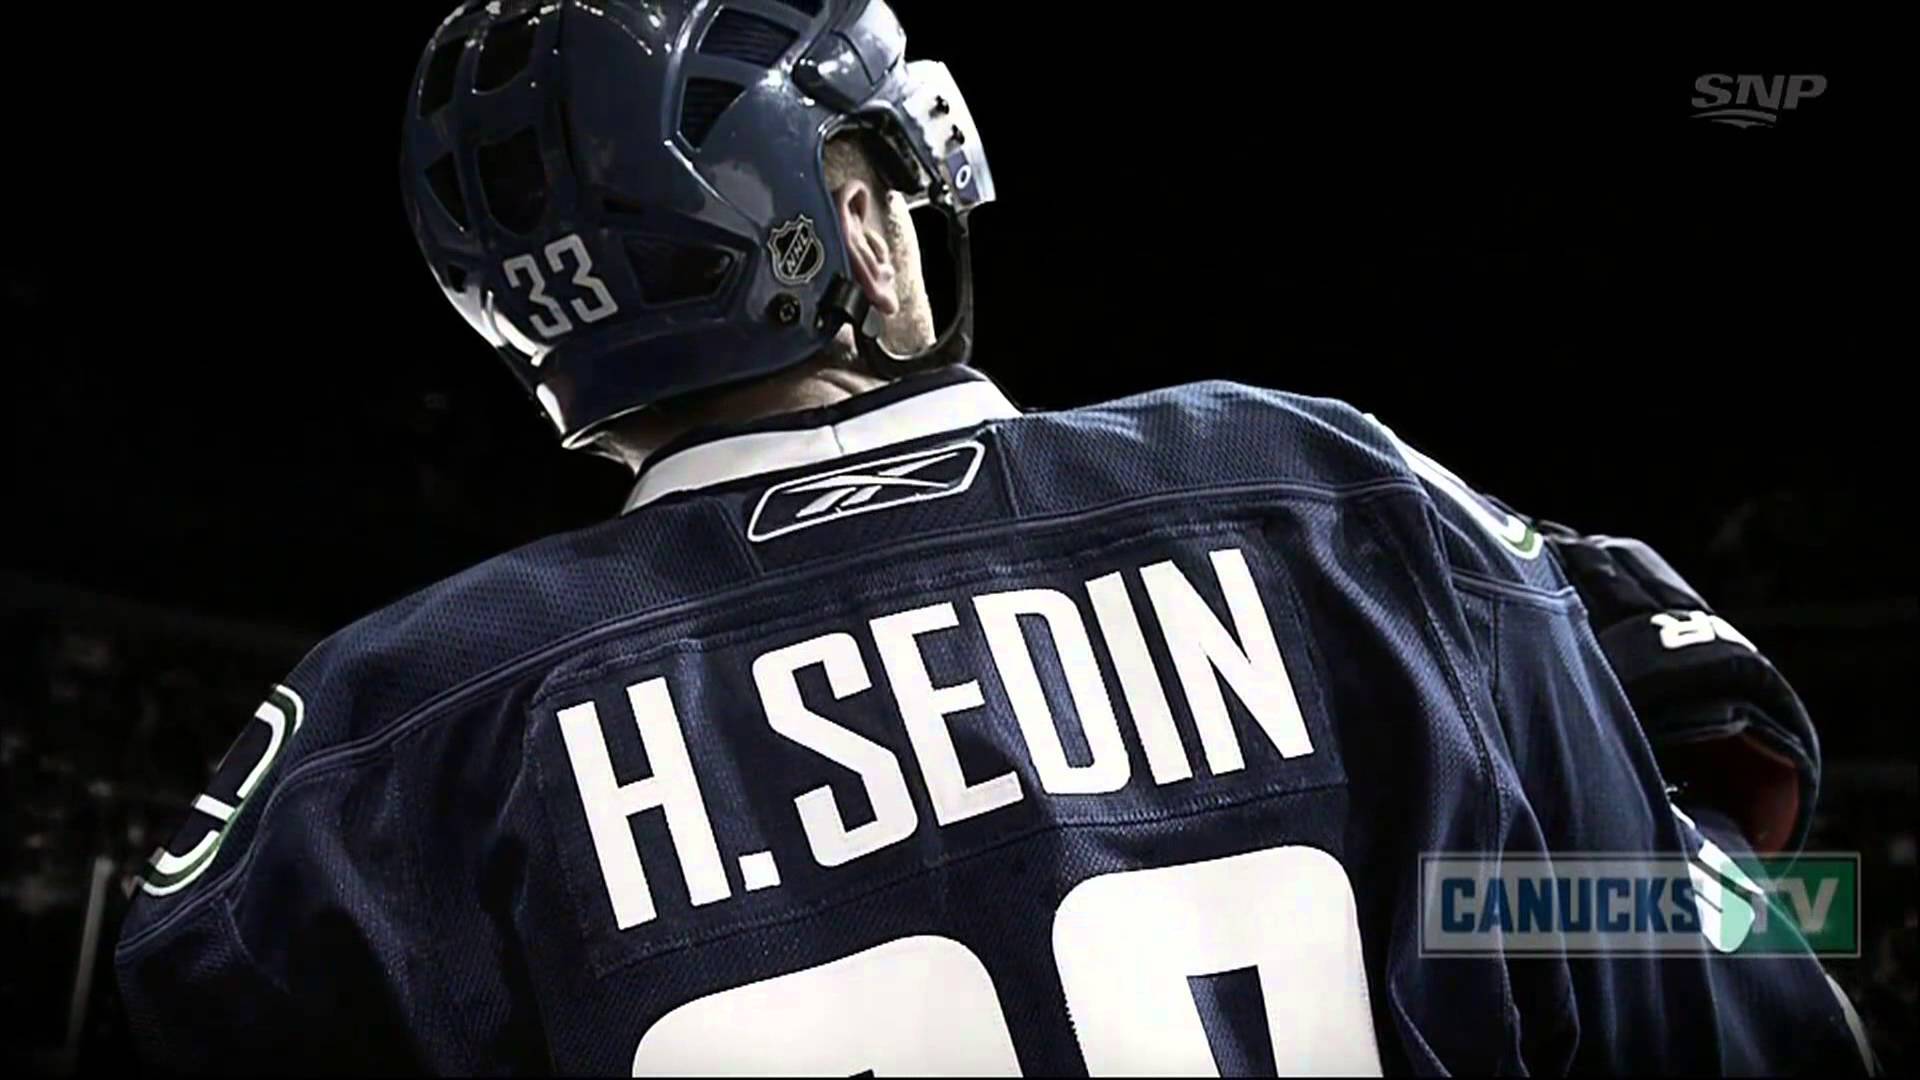 Hockey player of Vancouver Henrik Sedin wallpaper and image